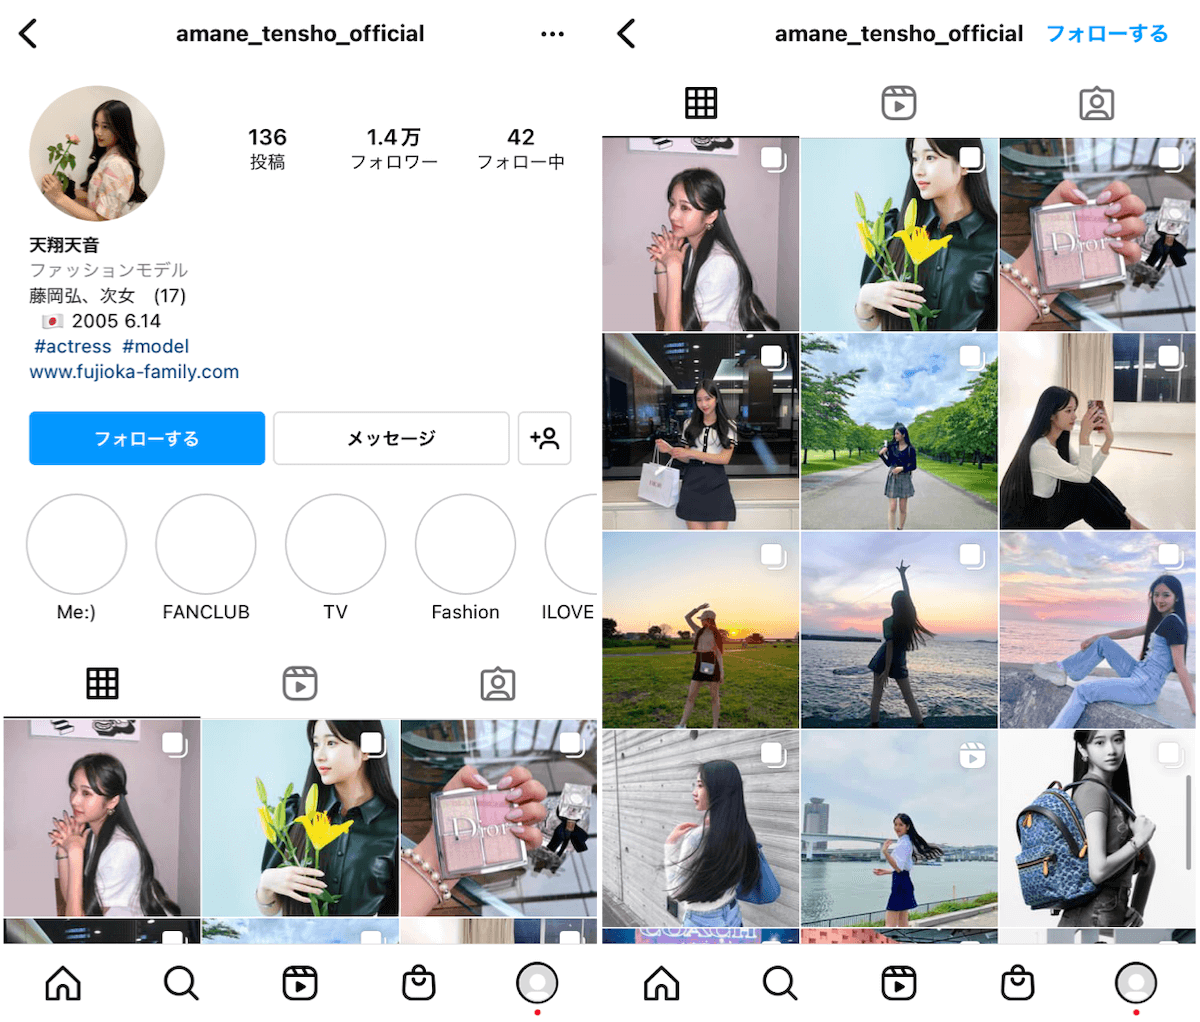 Instagram-teen-fashion-high-school-amane_tensho_official